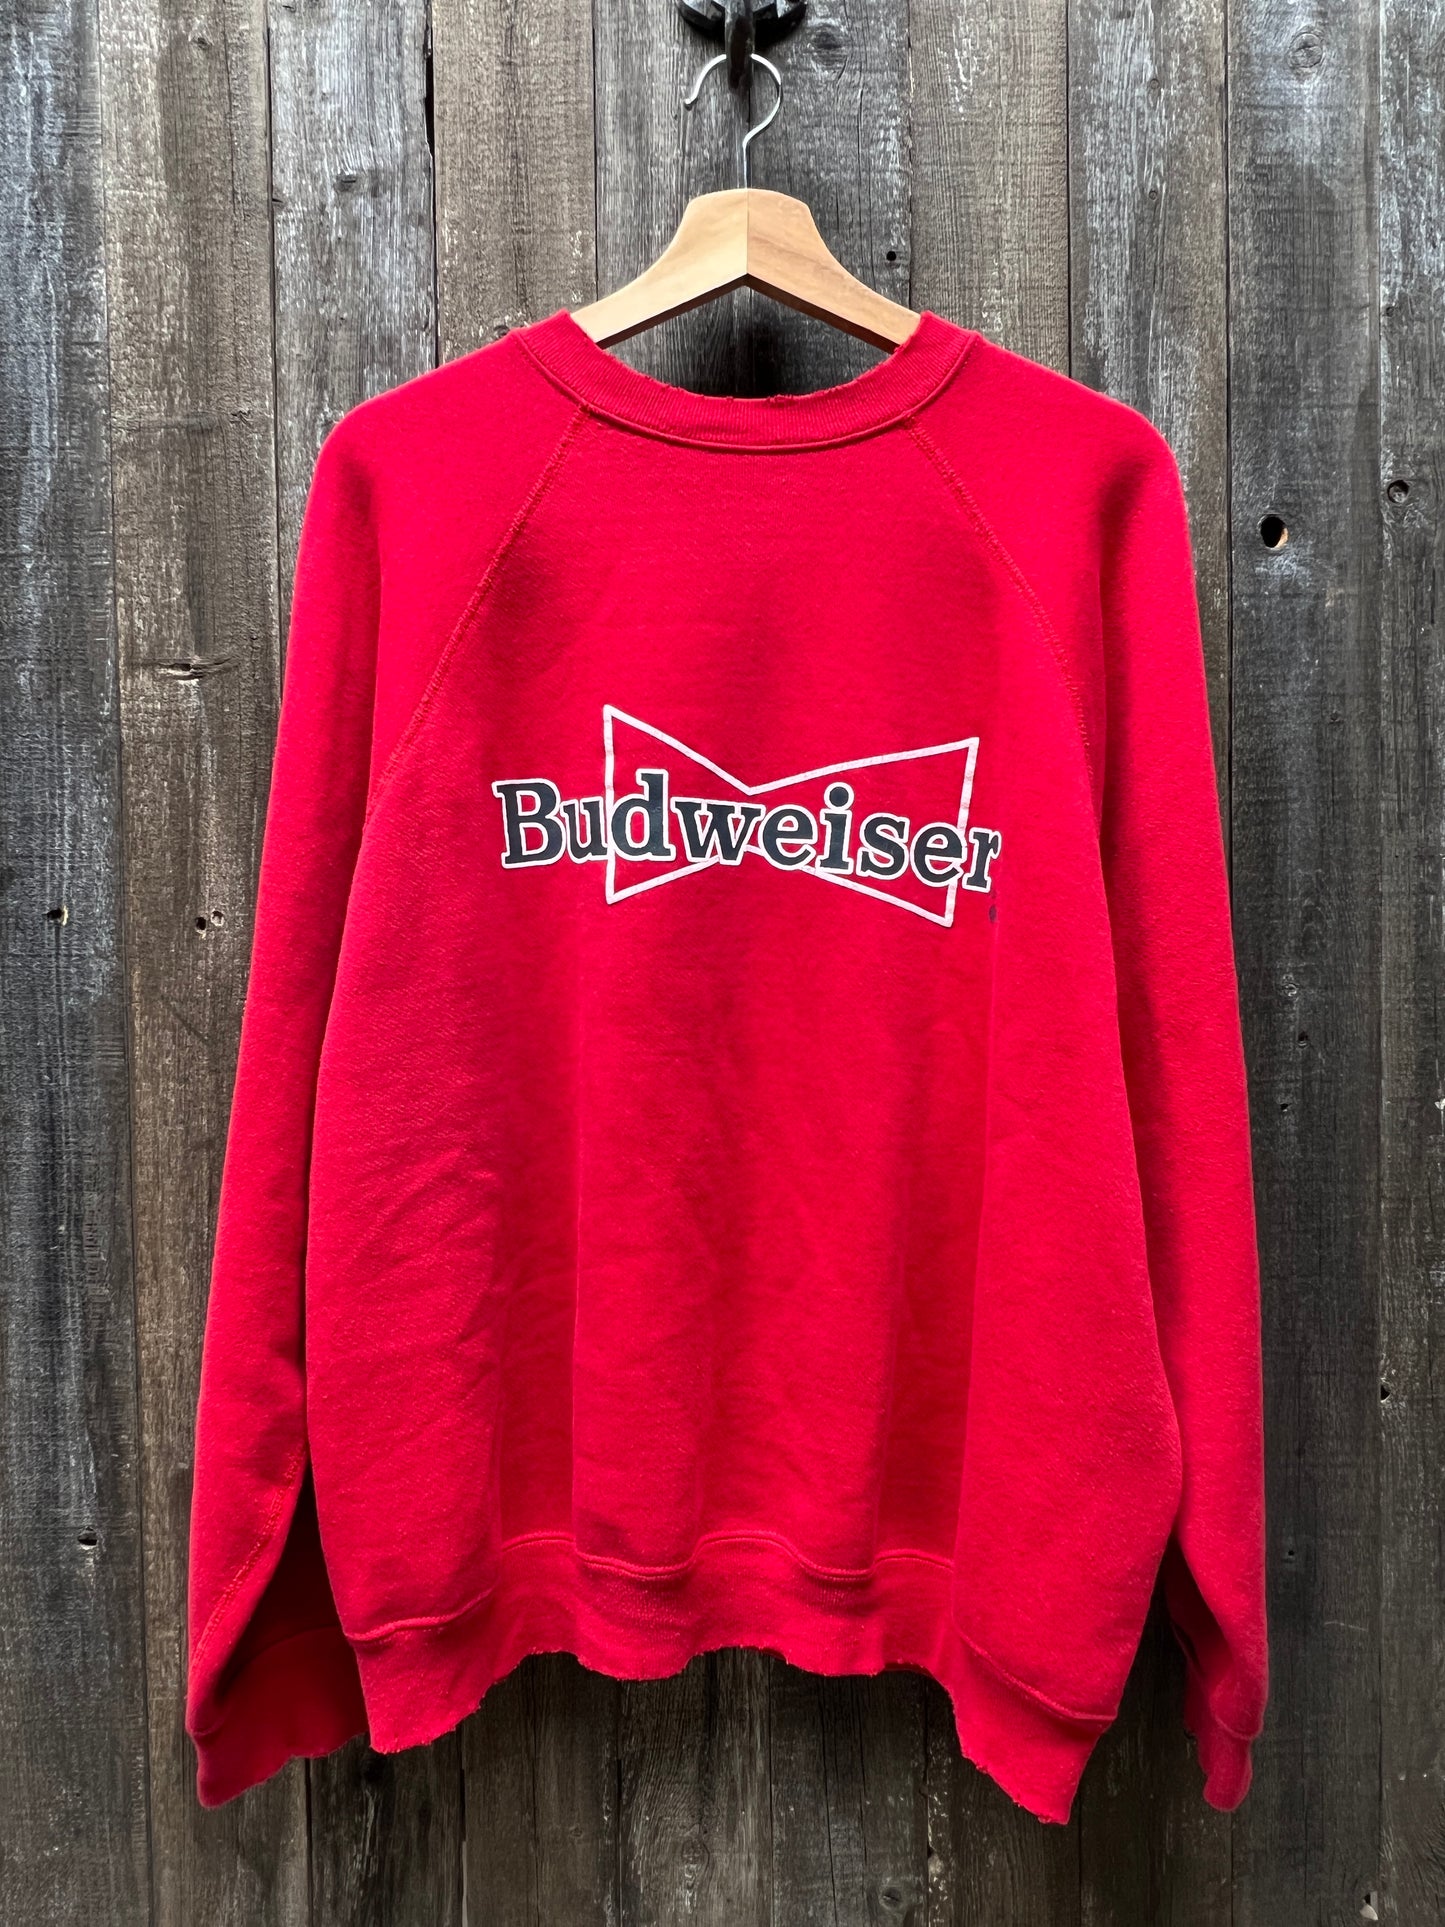 Budweiser Sweatshirt -XL-Customize Your Embroidery Wording